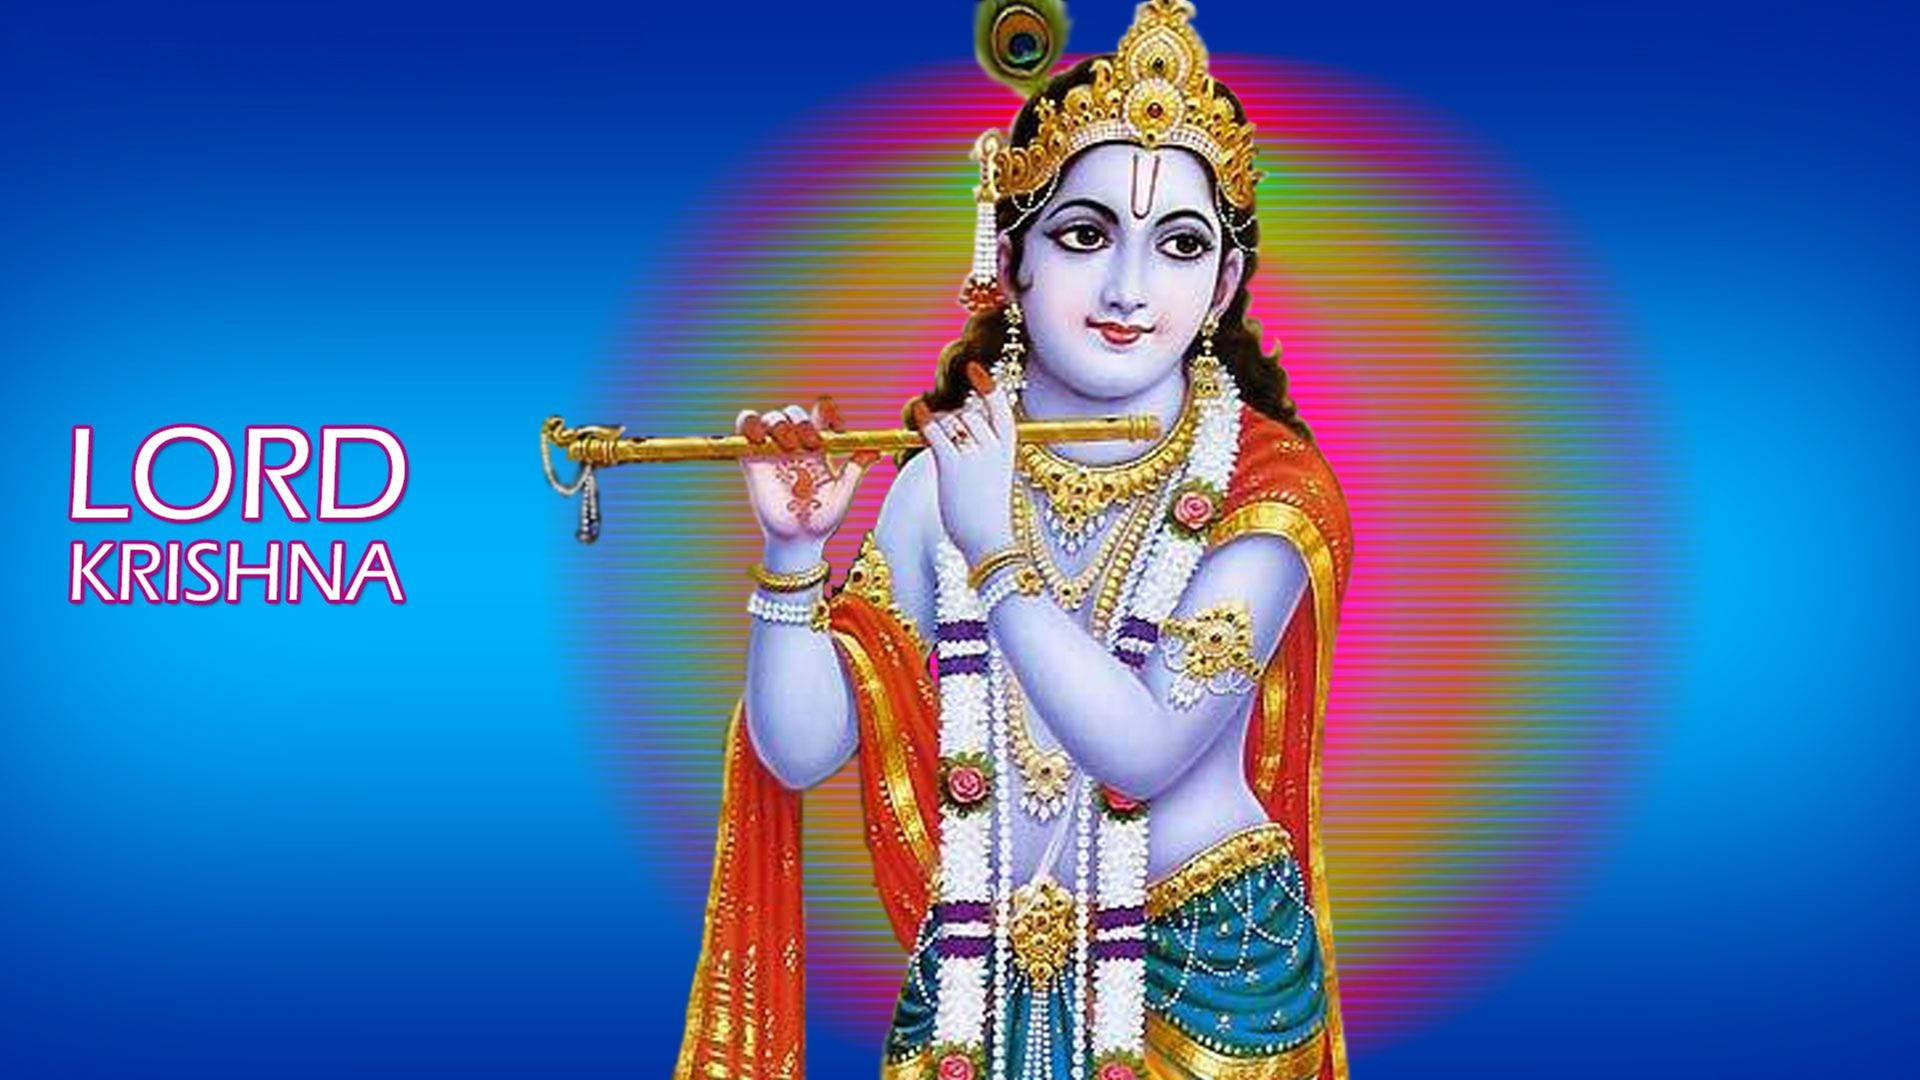 Download Lord Krishna 4k Psychedelic Digital Art Wallpaper 